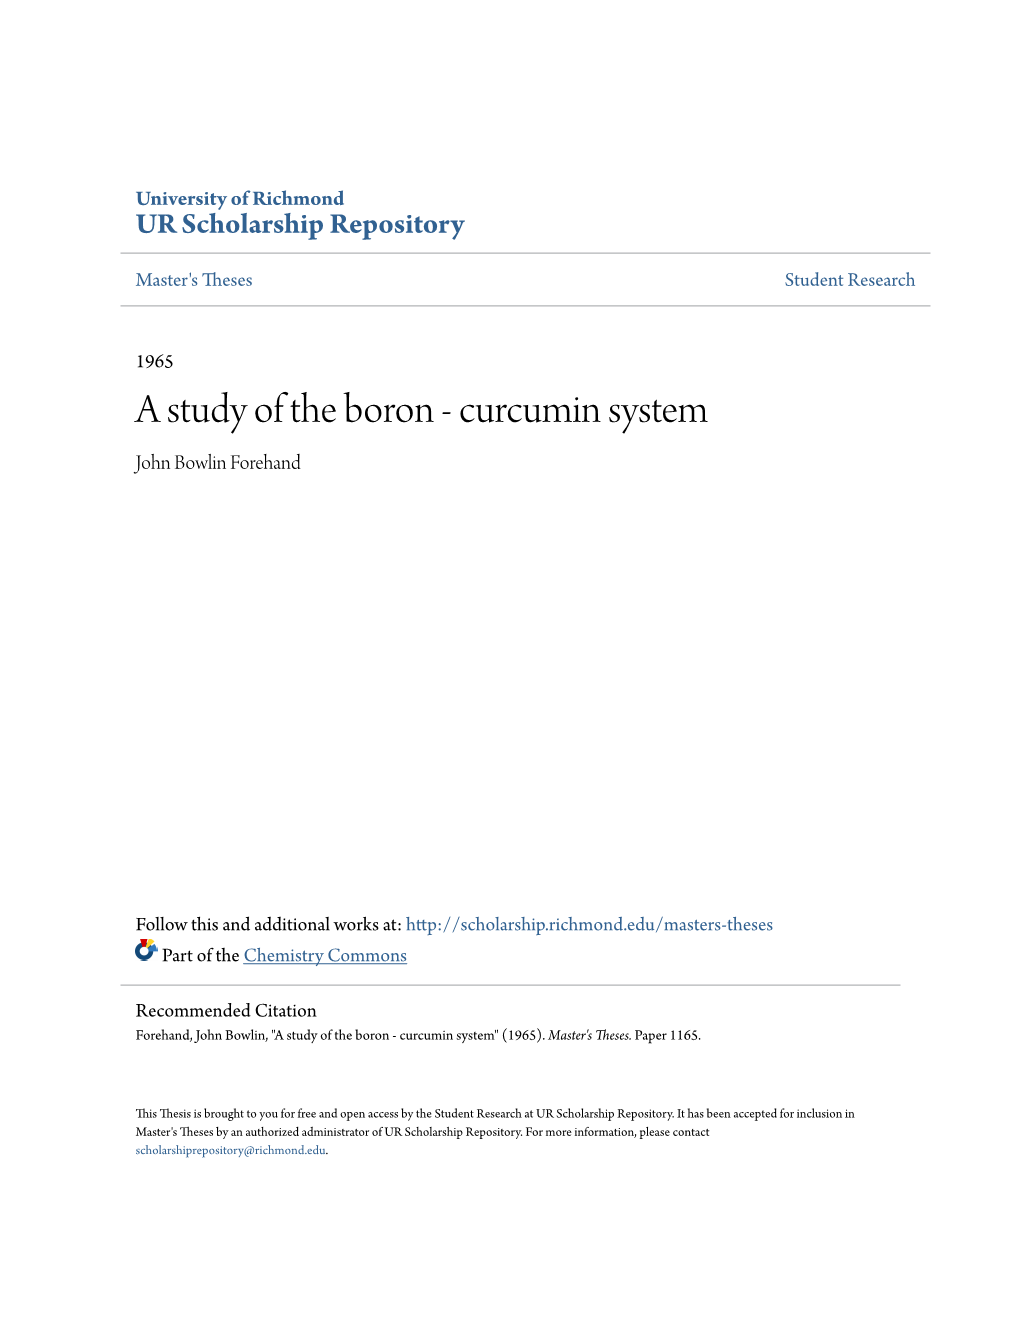 A Study of the Boron - Curcumin System John Bowlin Forehand